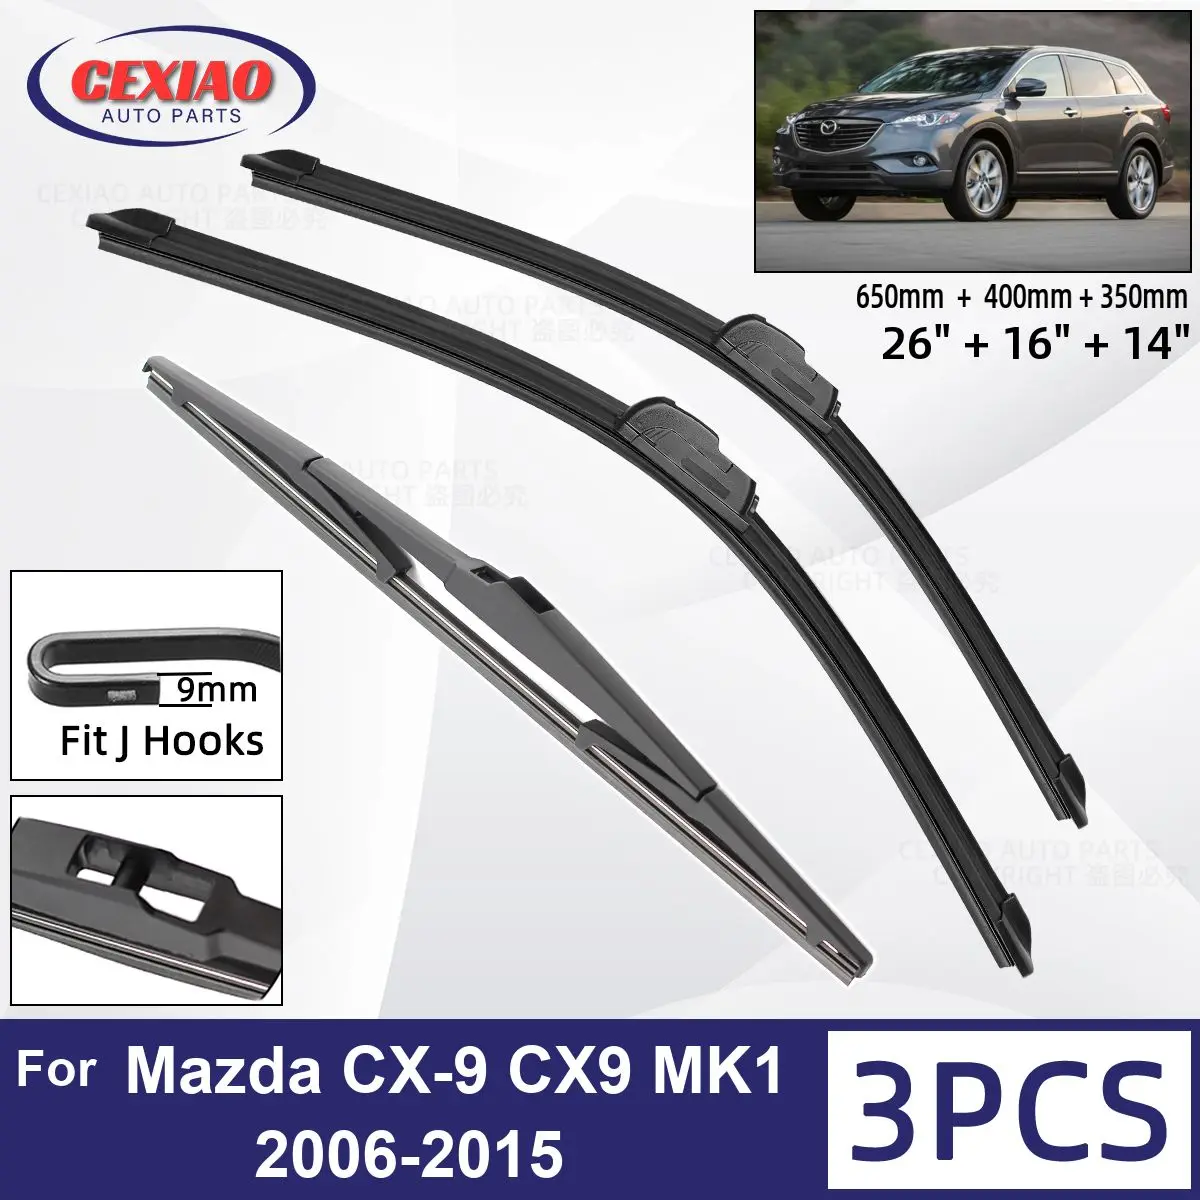 

For Mazda CX-9 CX9 MK1 2006-2015 Car Front Rear Wiper Blades Soft Rubber Windscreen Wipers Auto Windshield 26"+16"+14" 2013 2014